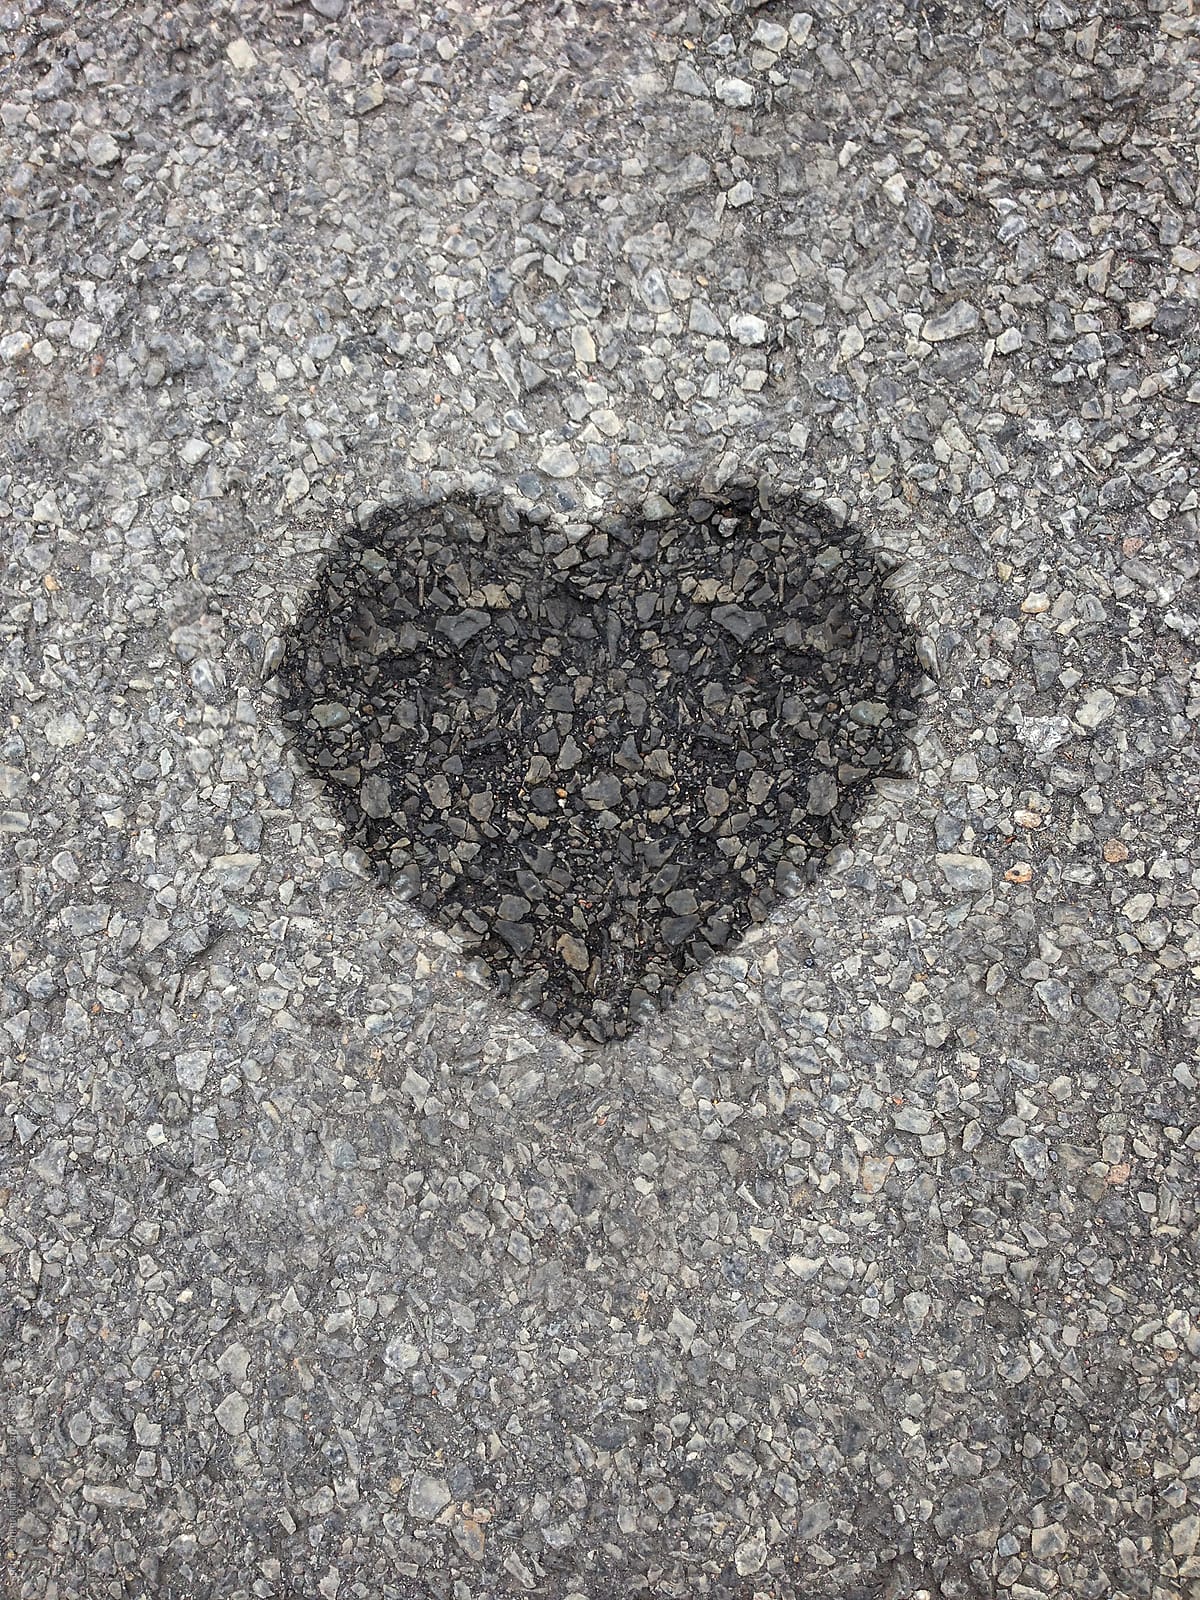 A wet spot shaped like a heart